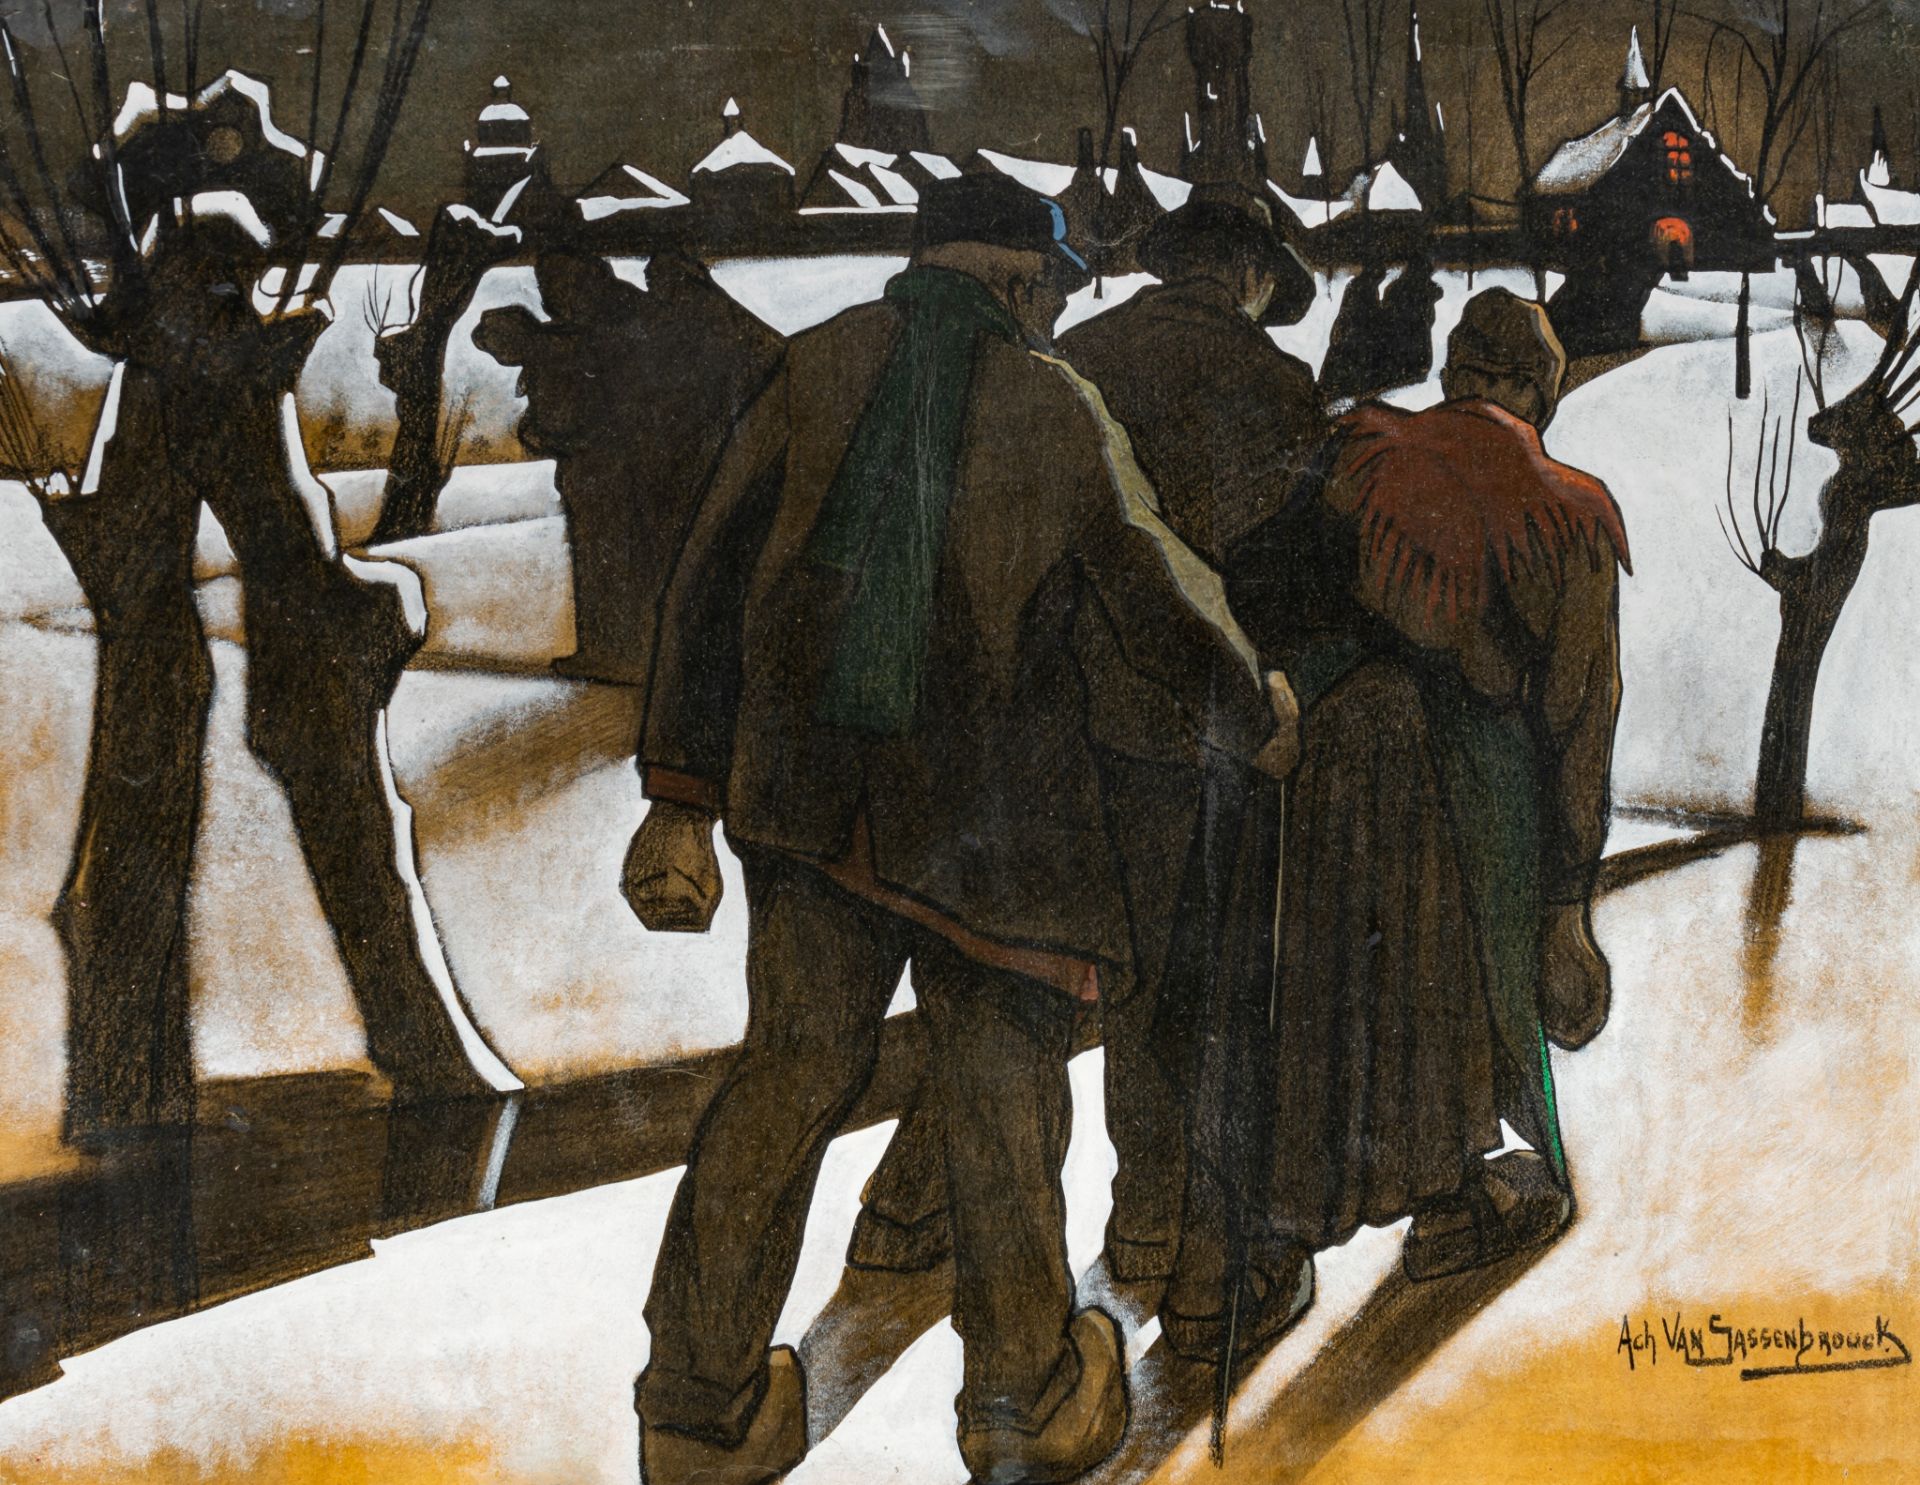 Achiel Van Sassenbrouck (1886-1979), figures in a winter landscape, charcoal and gouache on paper 56